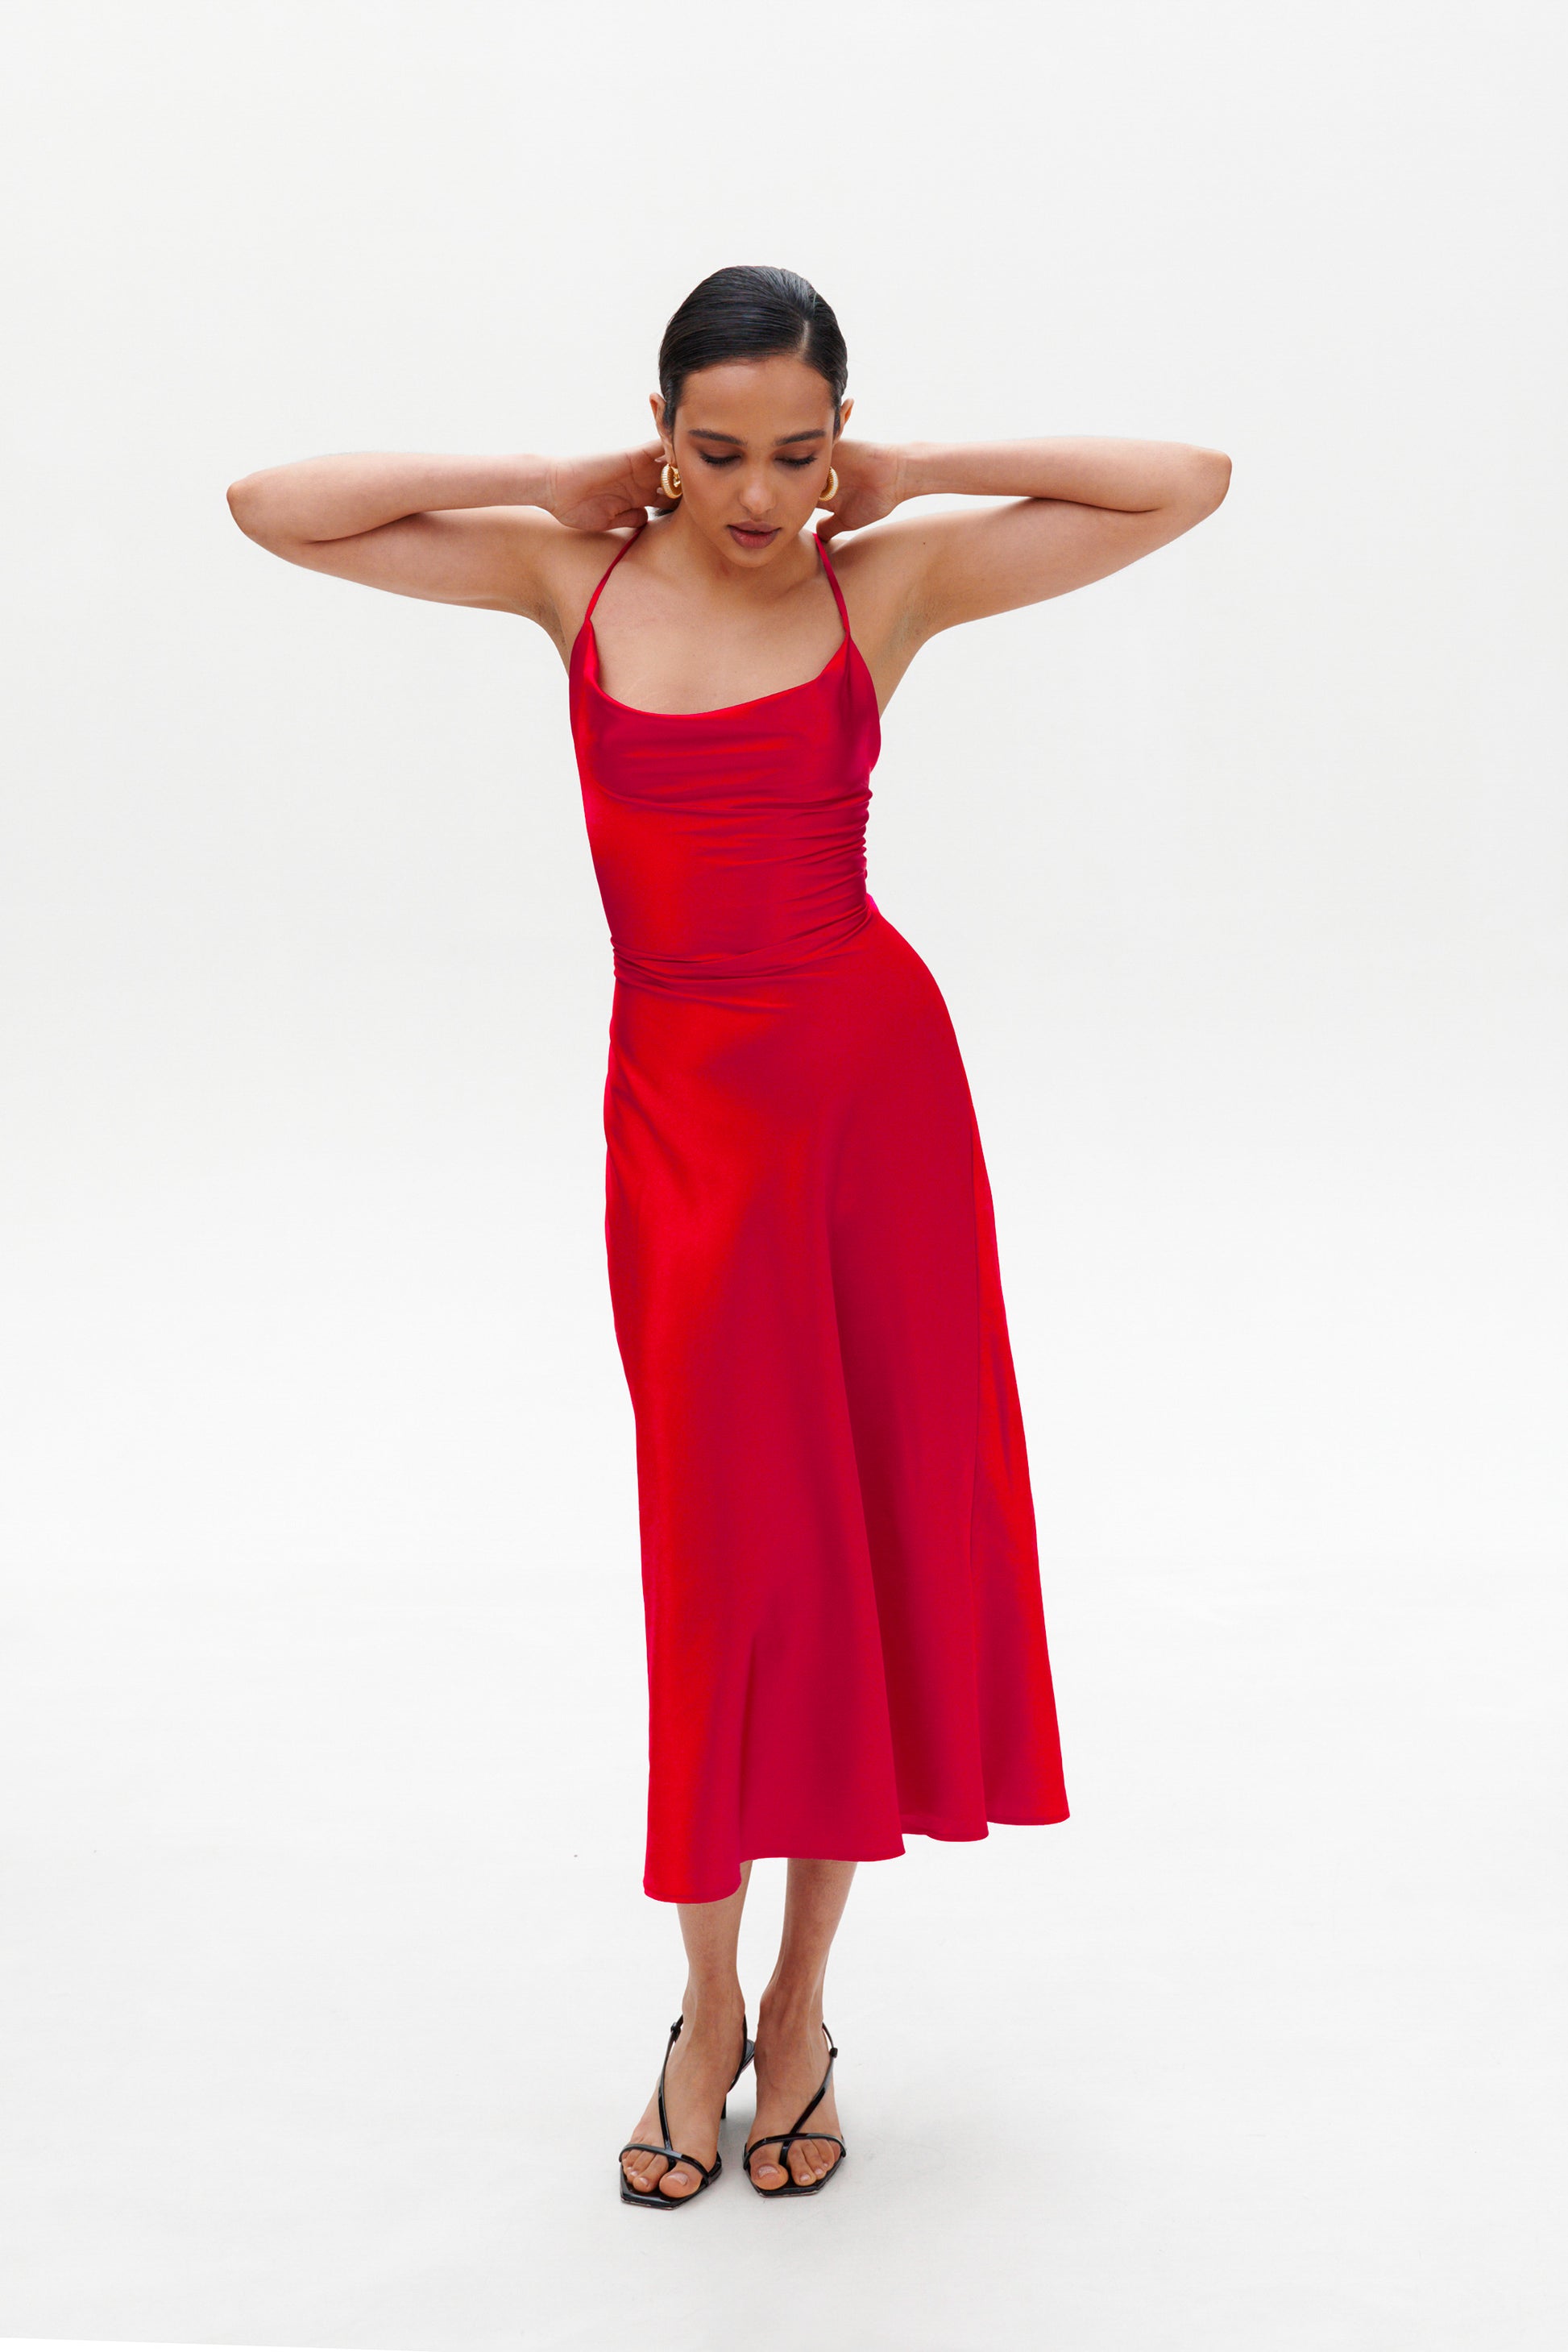 Satin red dress